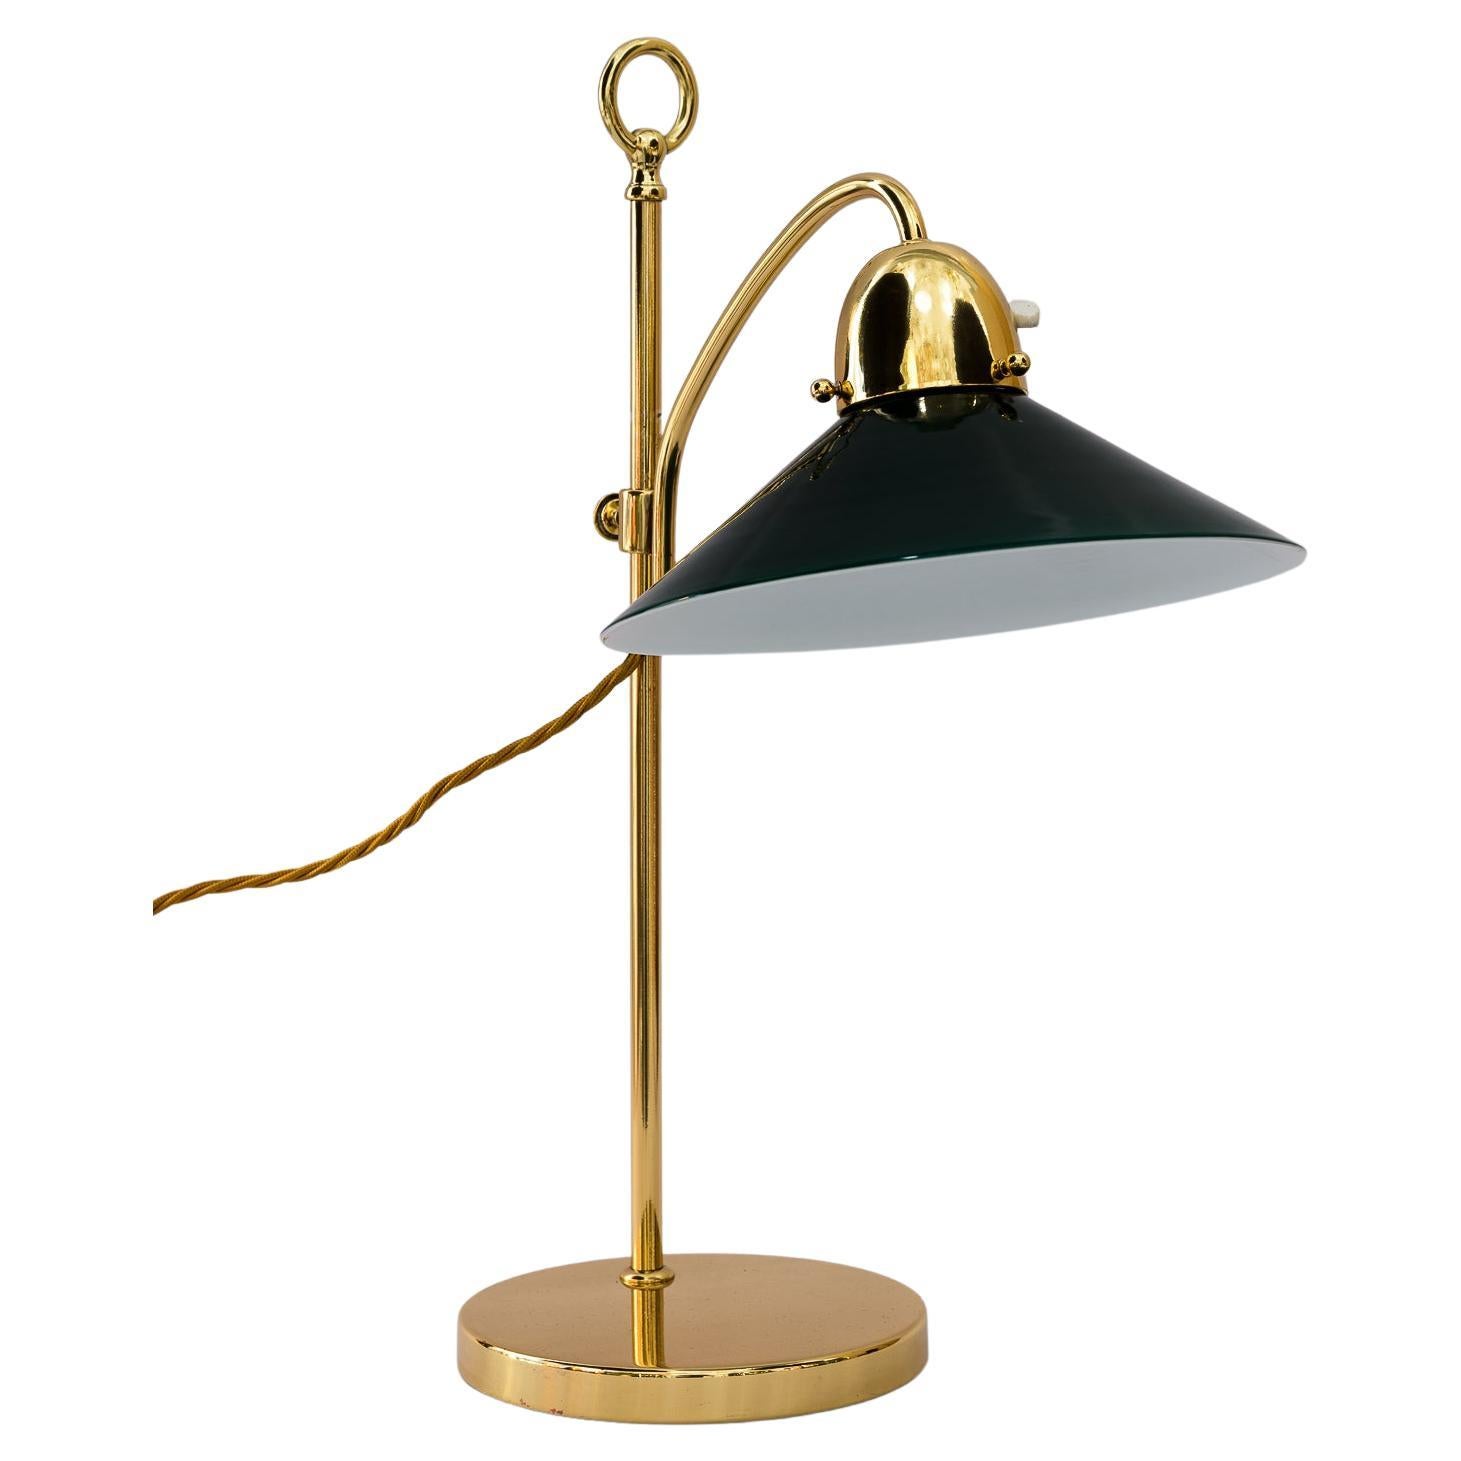 Rare Art Deco hight adjustable condor table lamp with original glass shade 1920s